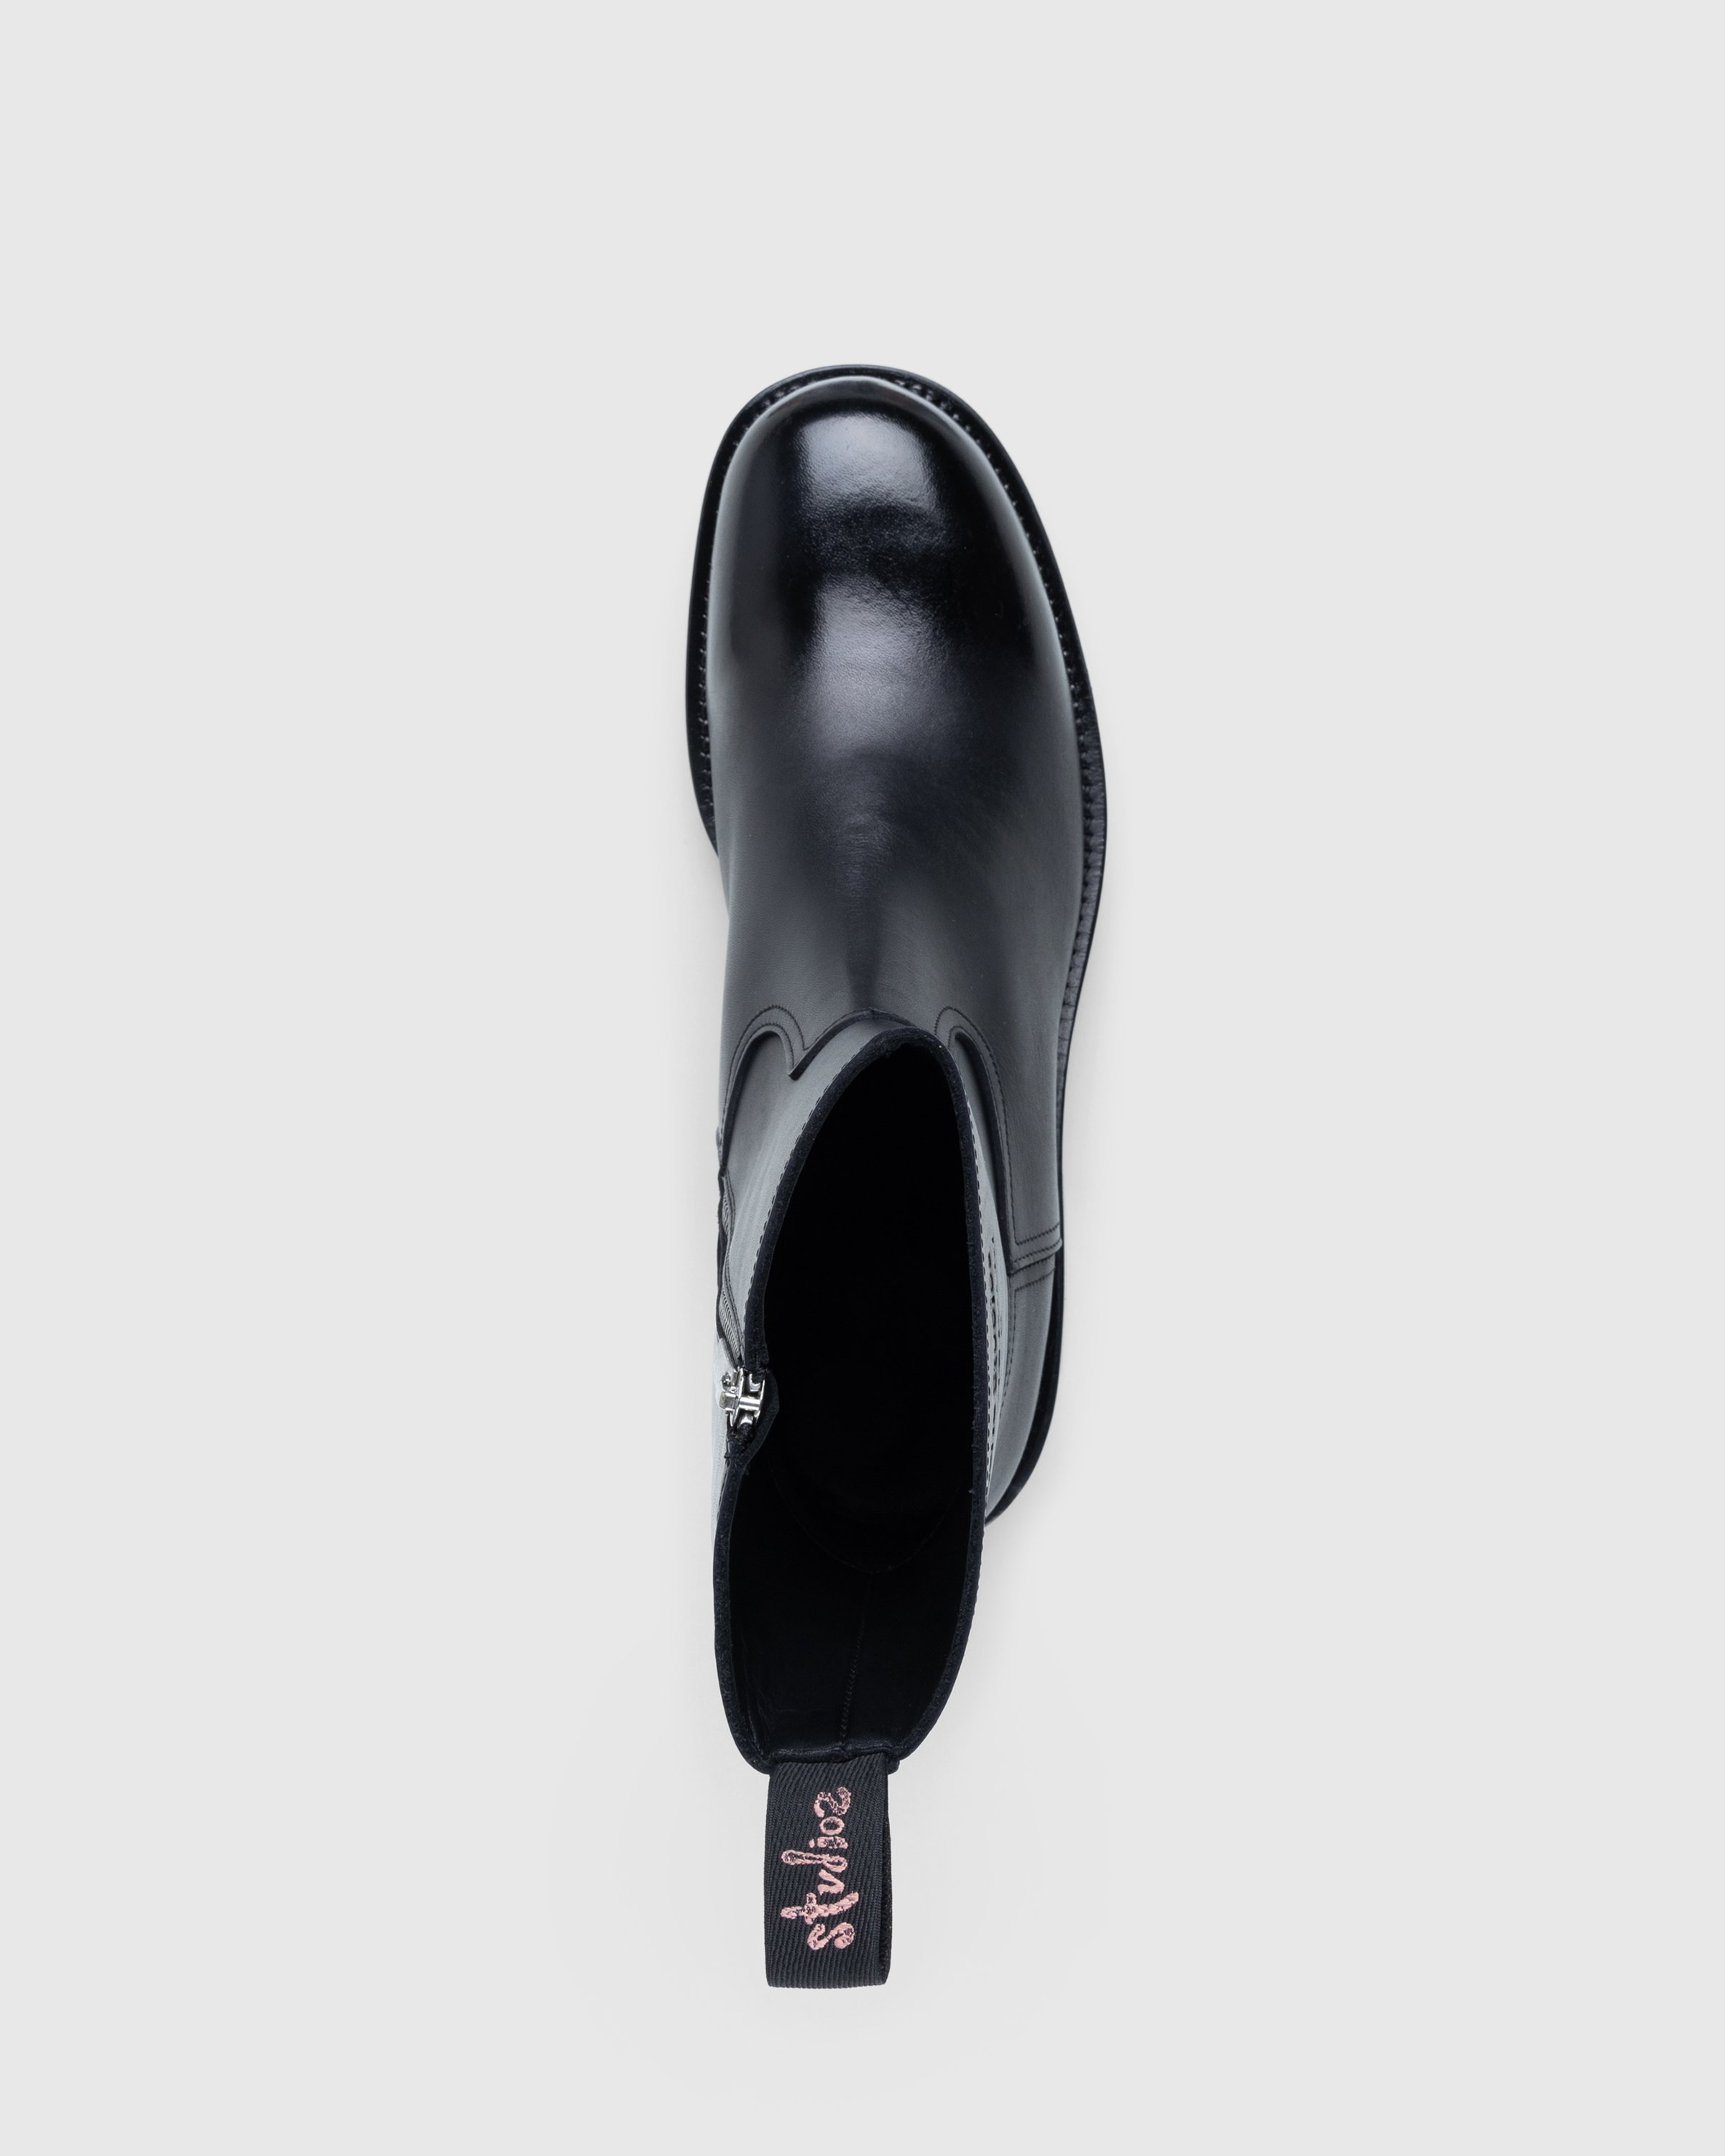 Acne Studios - Sprayed Leather Ankle Boots Black - Footwear - Black - Image 5